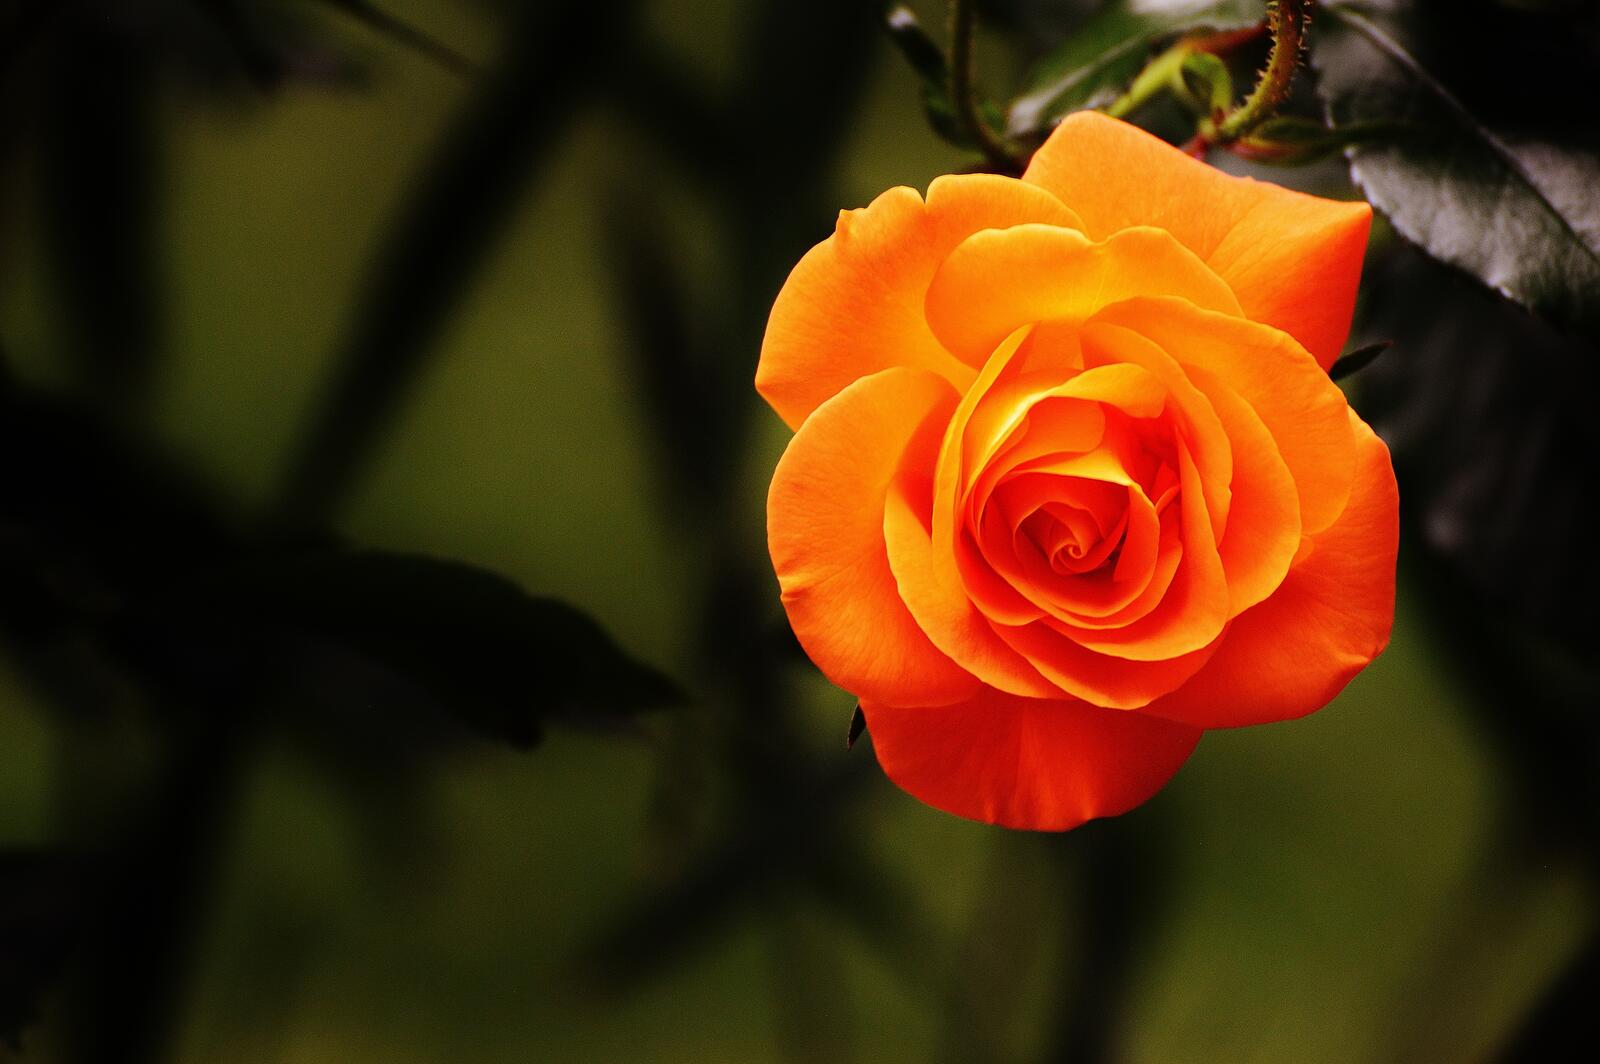 Free photo A bright orange lone rose